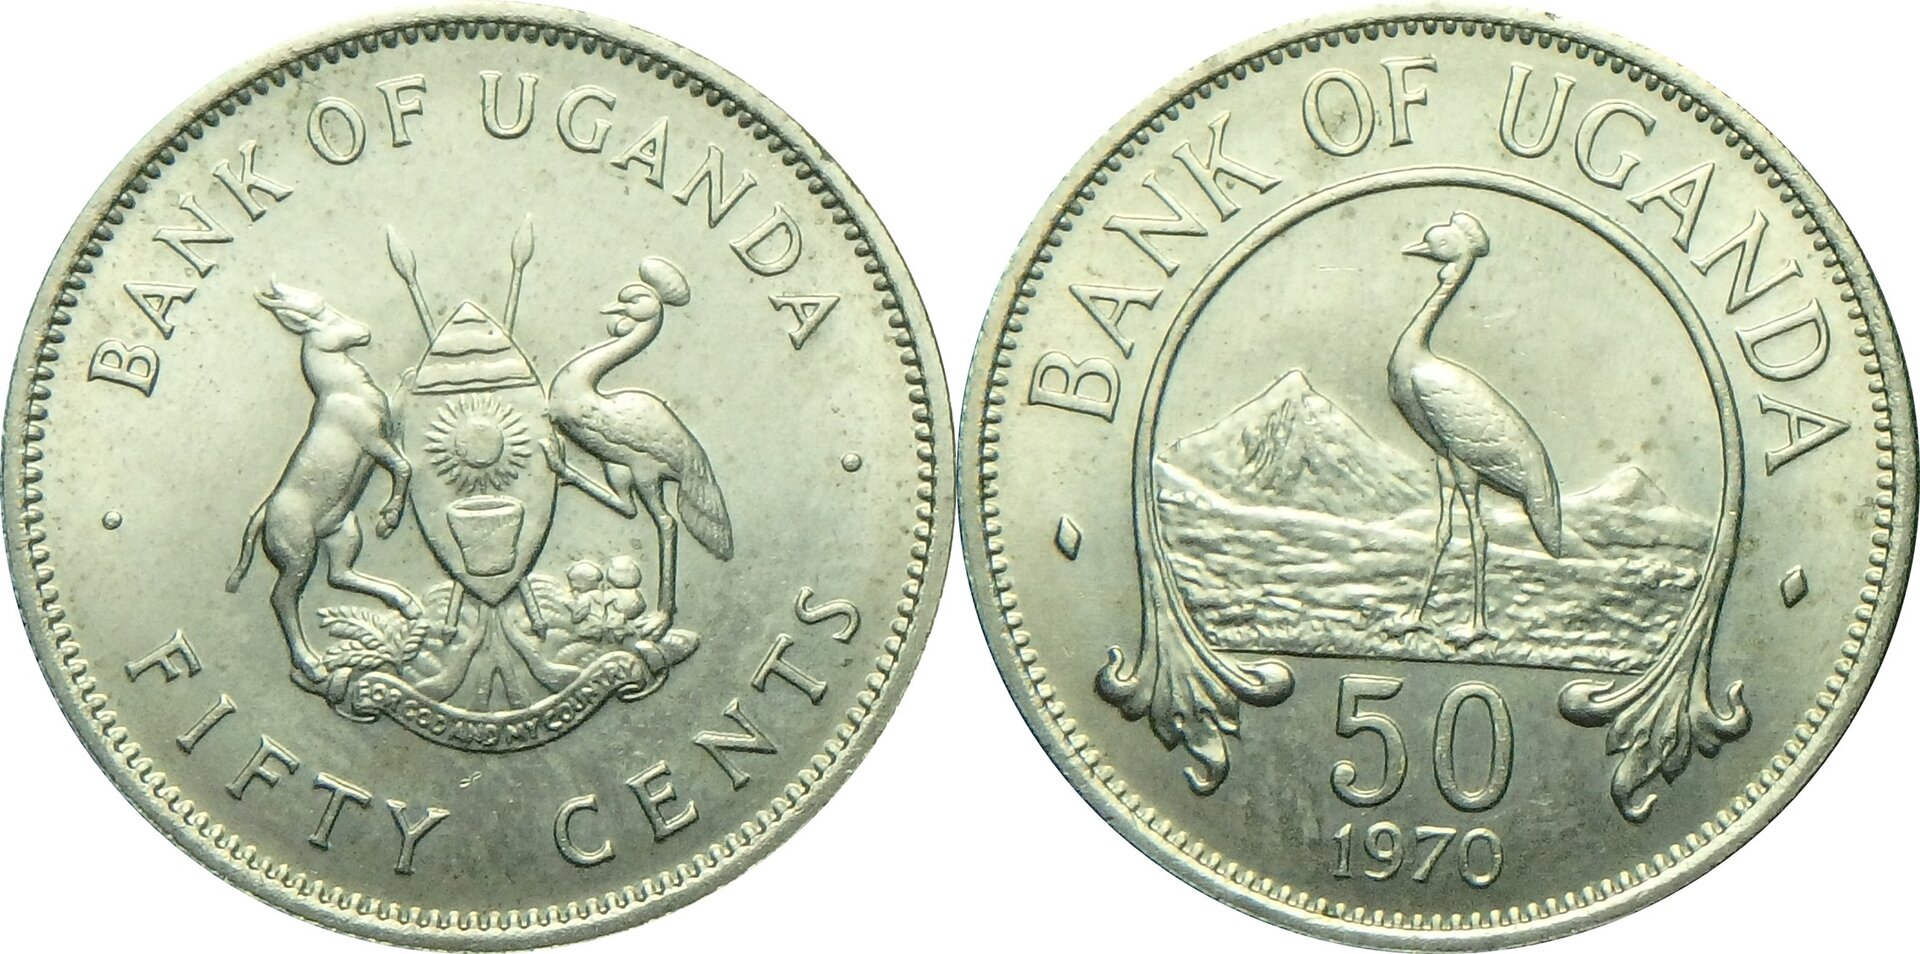 1970 UG 50 c.jpg